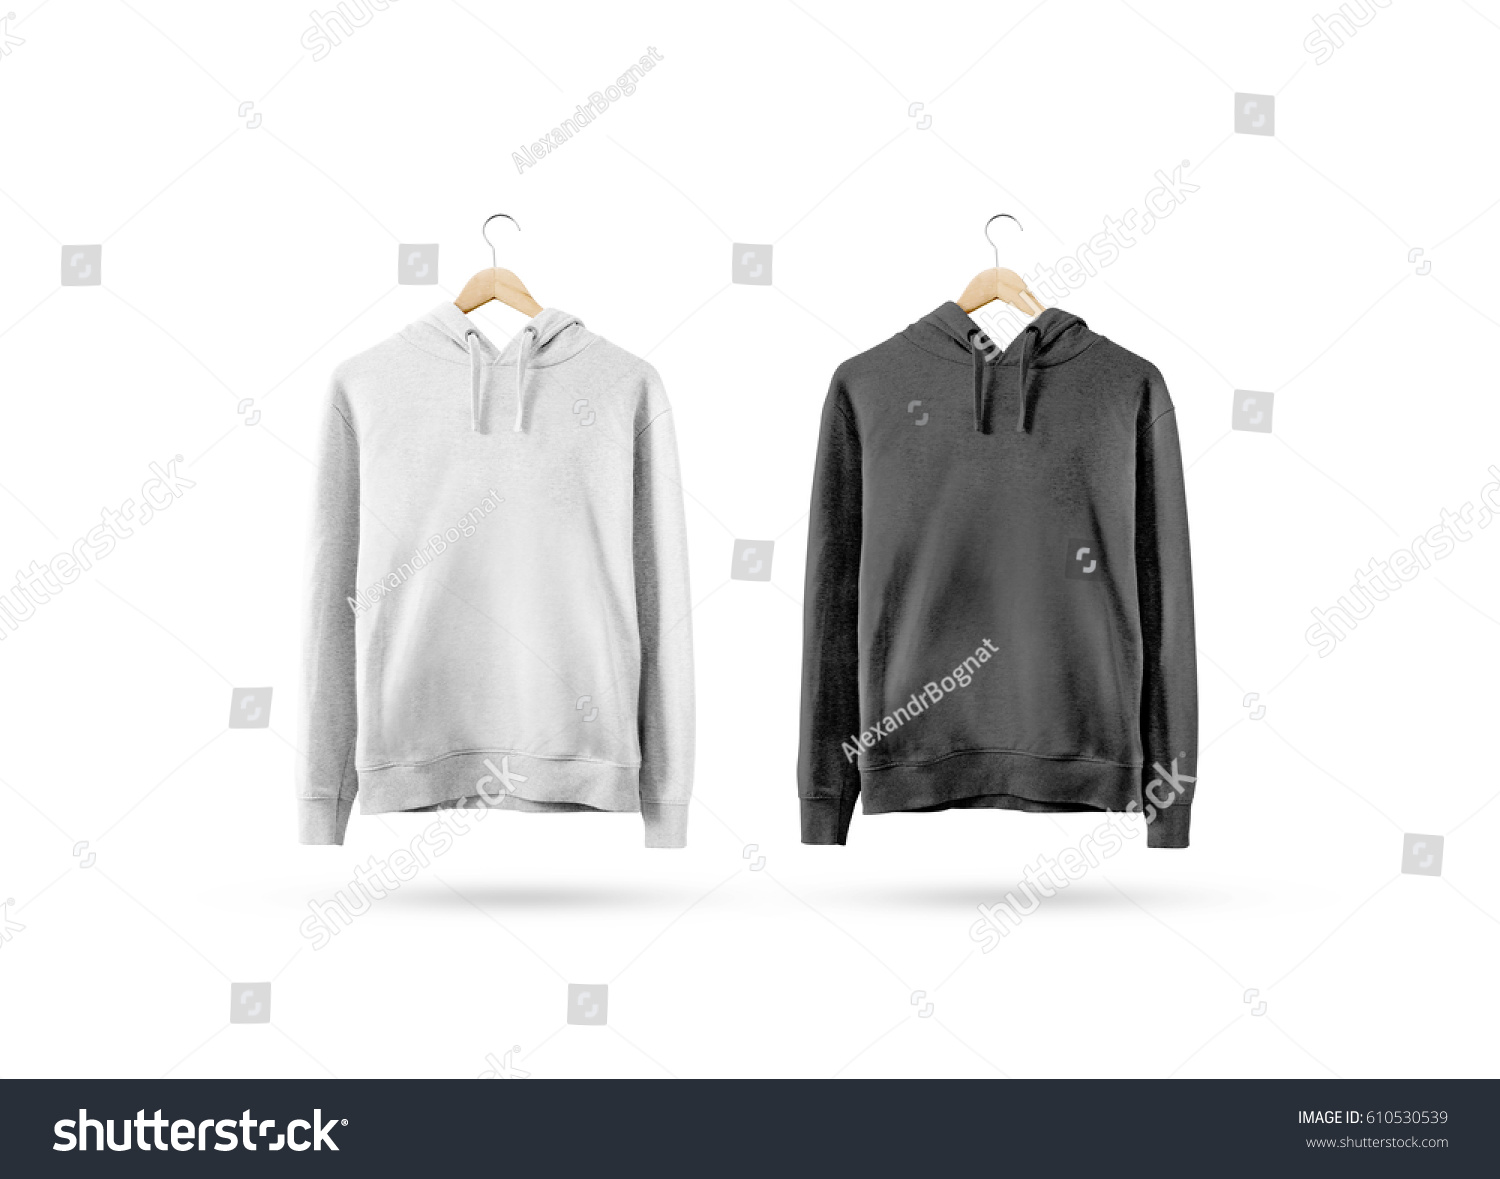 Blank Black White Sweatshirt Mockup Hanging Stock Photo 